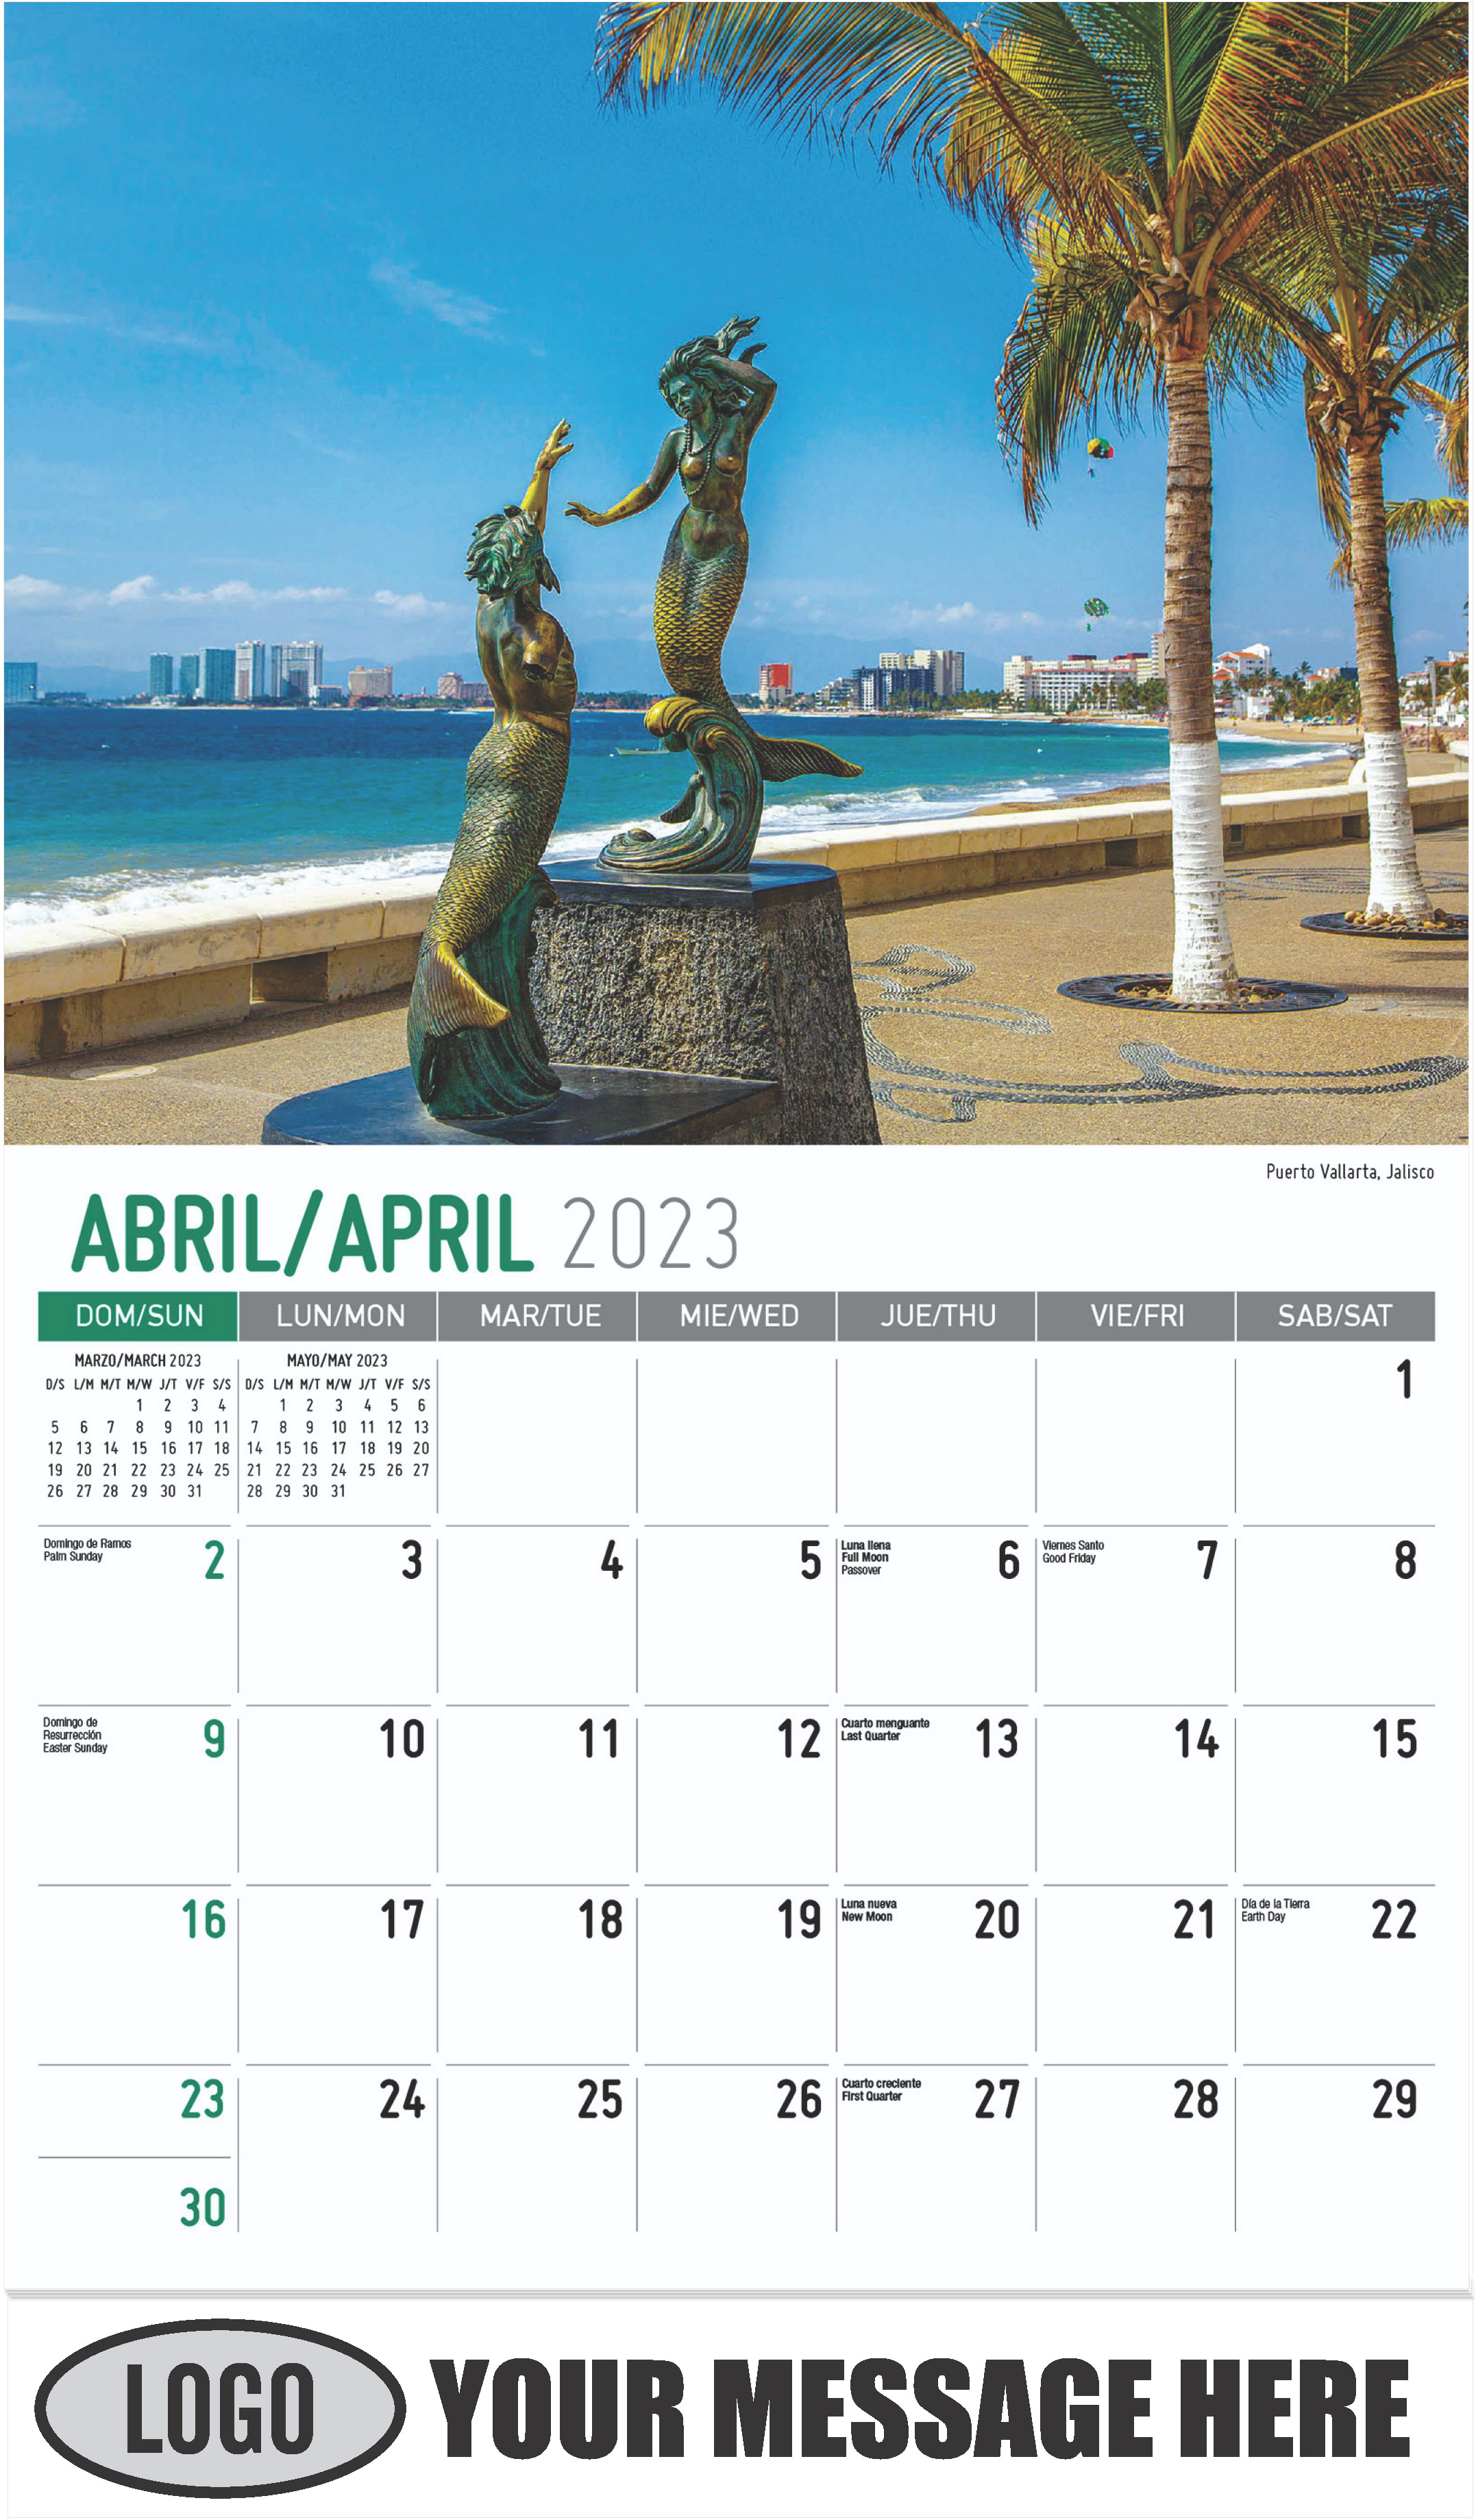 Puerto Vallarta, Jalisco - April - Scenes of Mexico (Spanish-English bilingual) 2023 Promotional Calendar